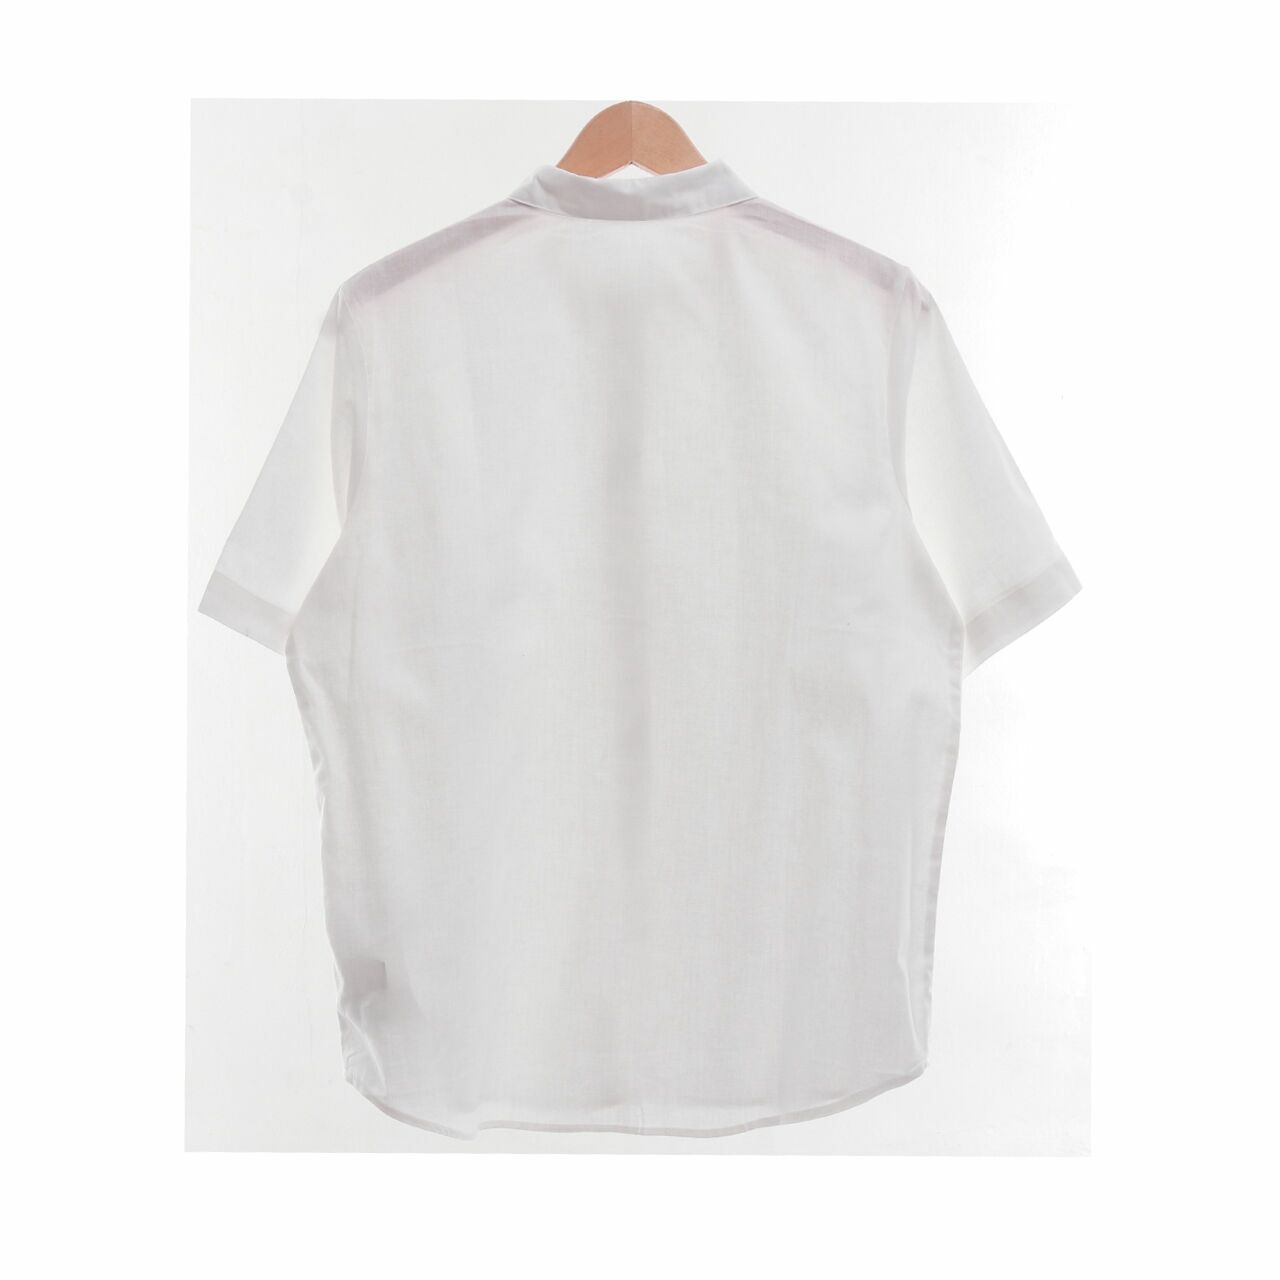 Luna Habit White Shirt